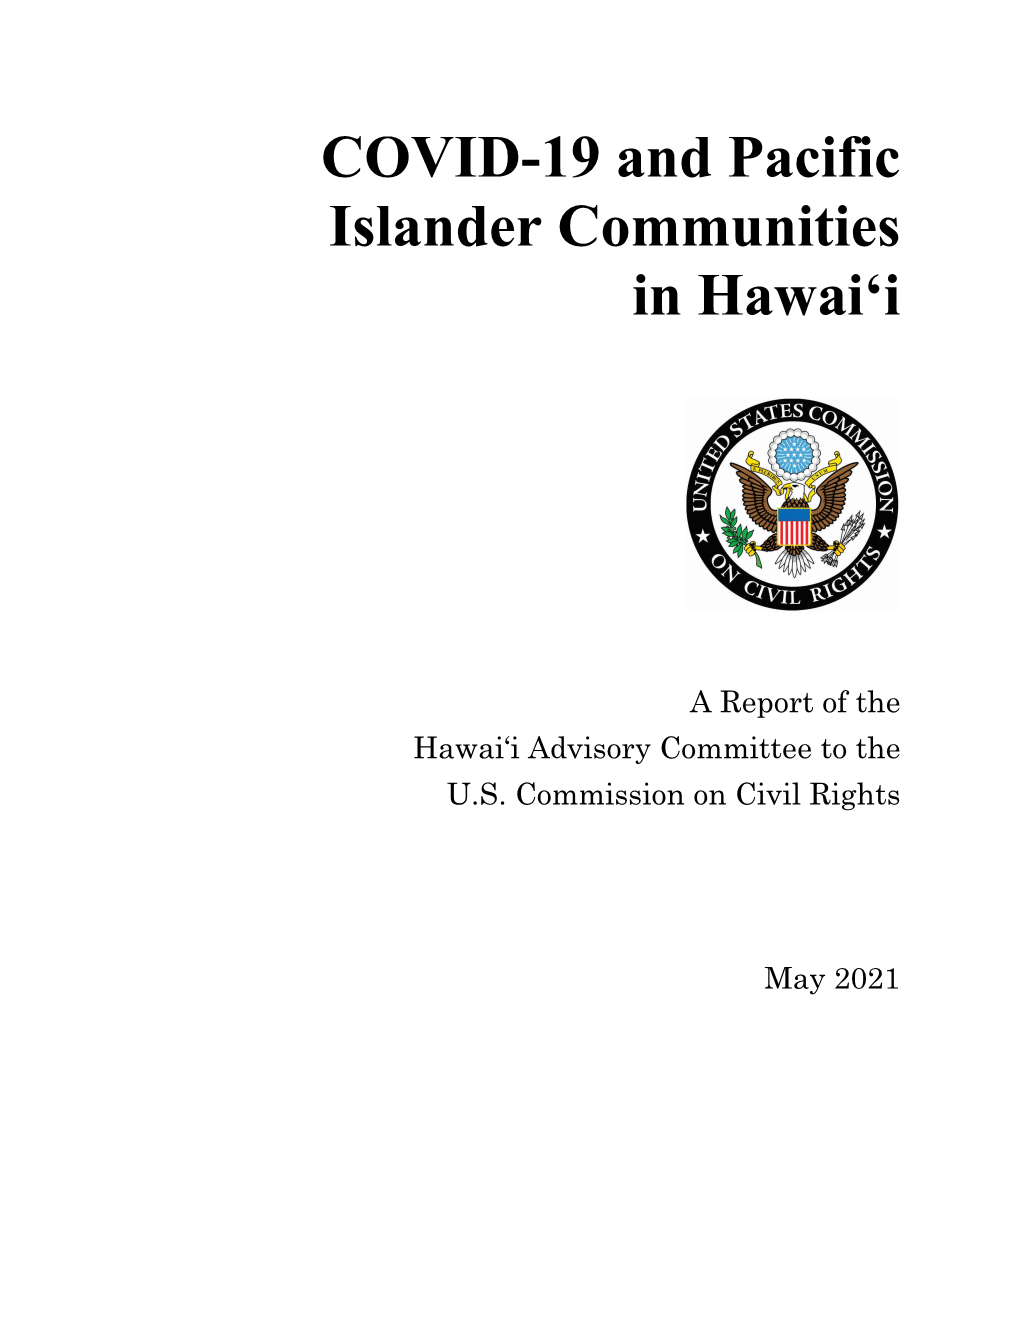 COVID-19 and Pacific Islander Communities in Hawai'i (2021)